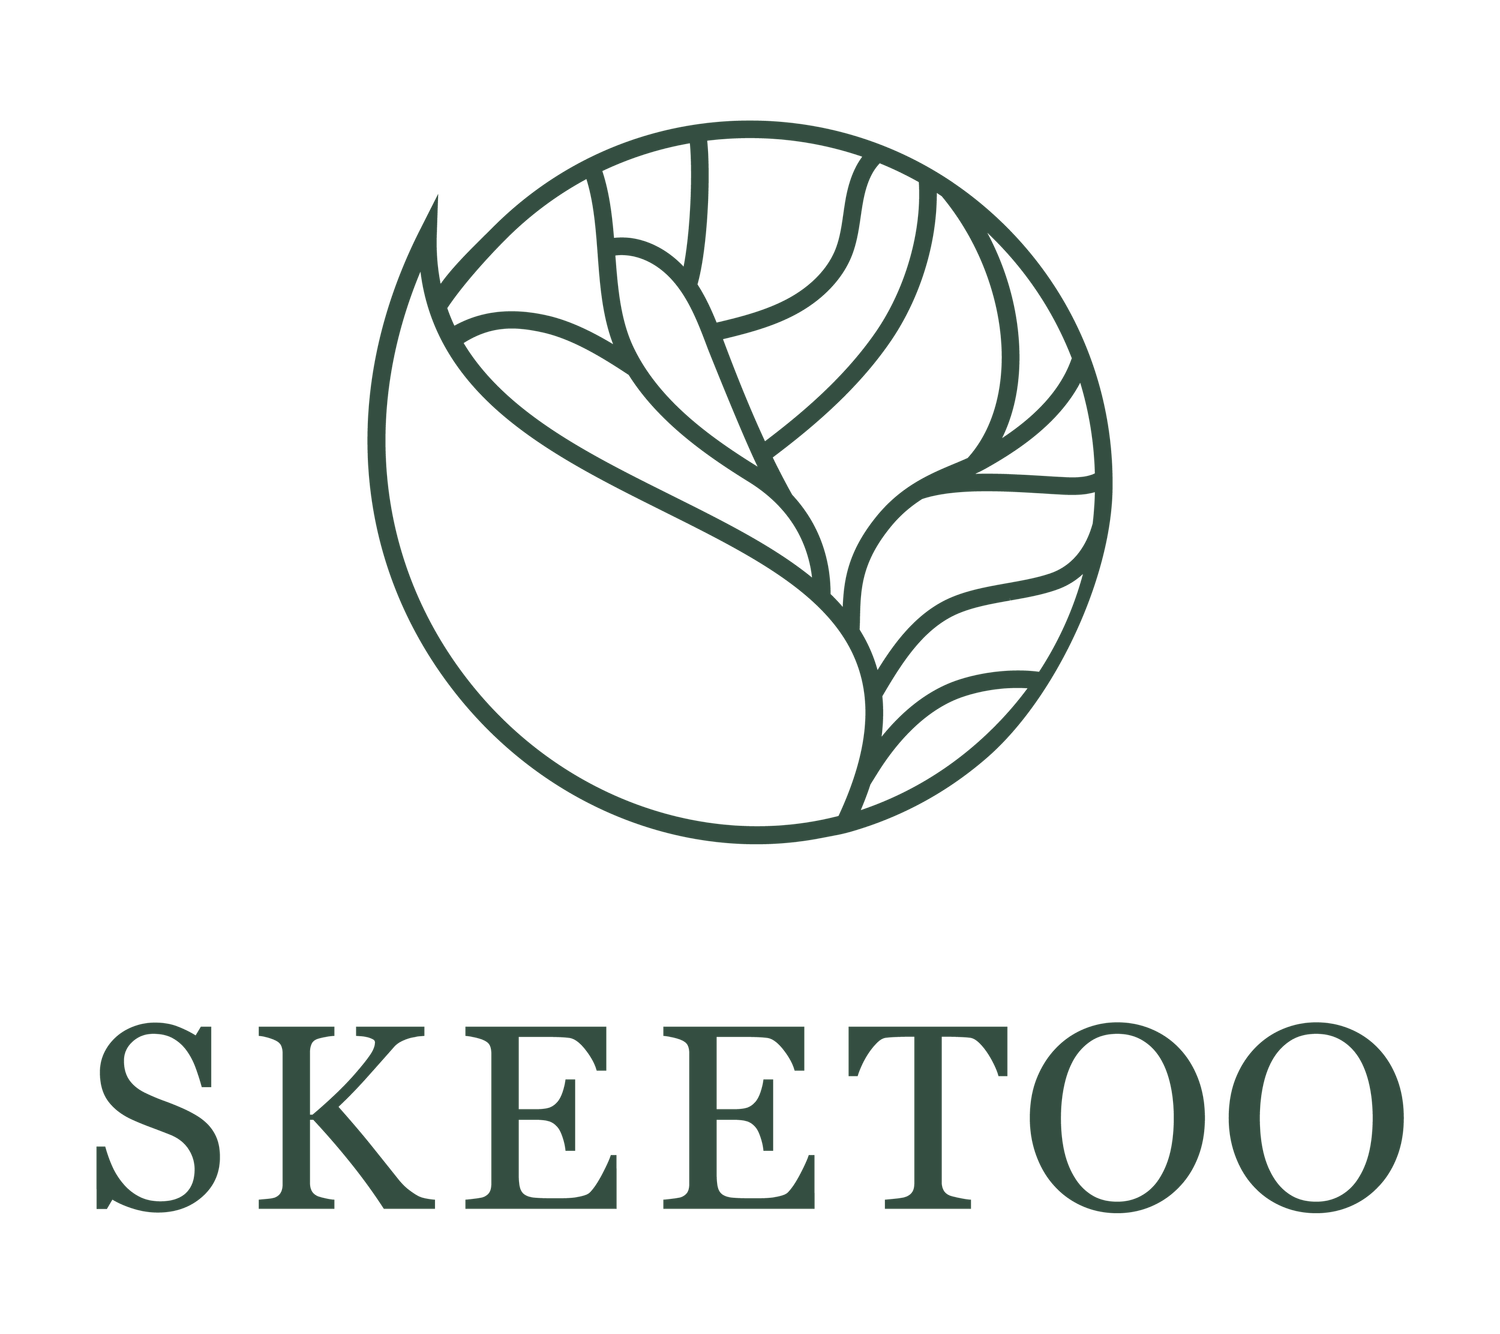 www.skeetoo.com